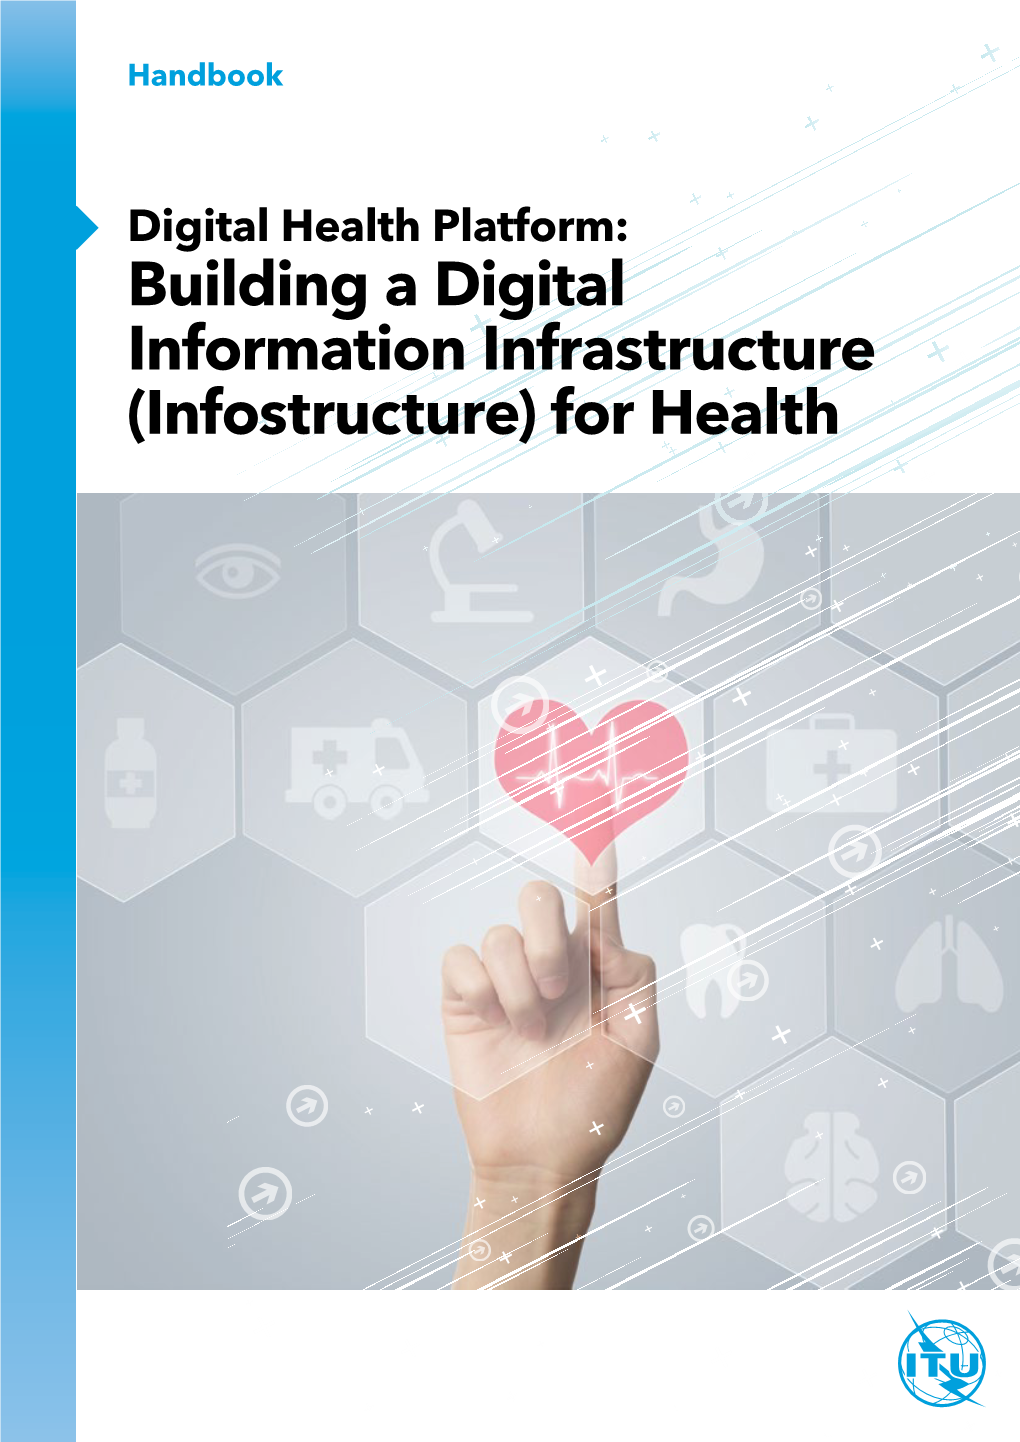 Building a Digital Information Infrastructure (Infostructure) for Health Handbook Acknowledgements